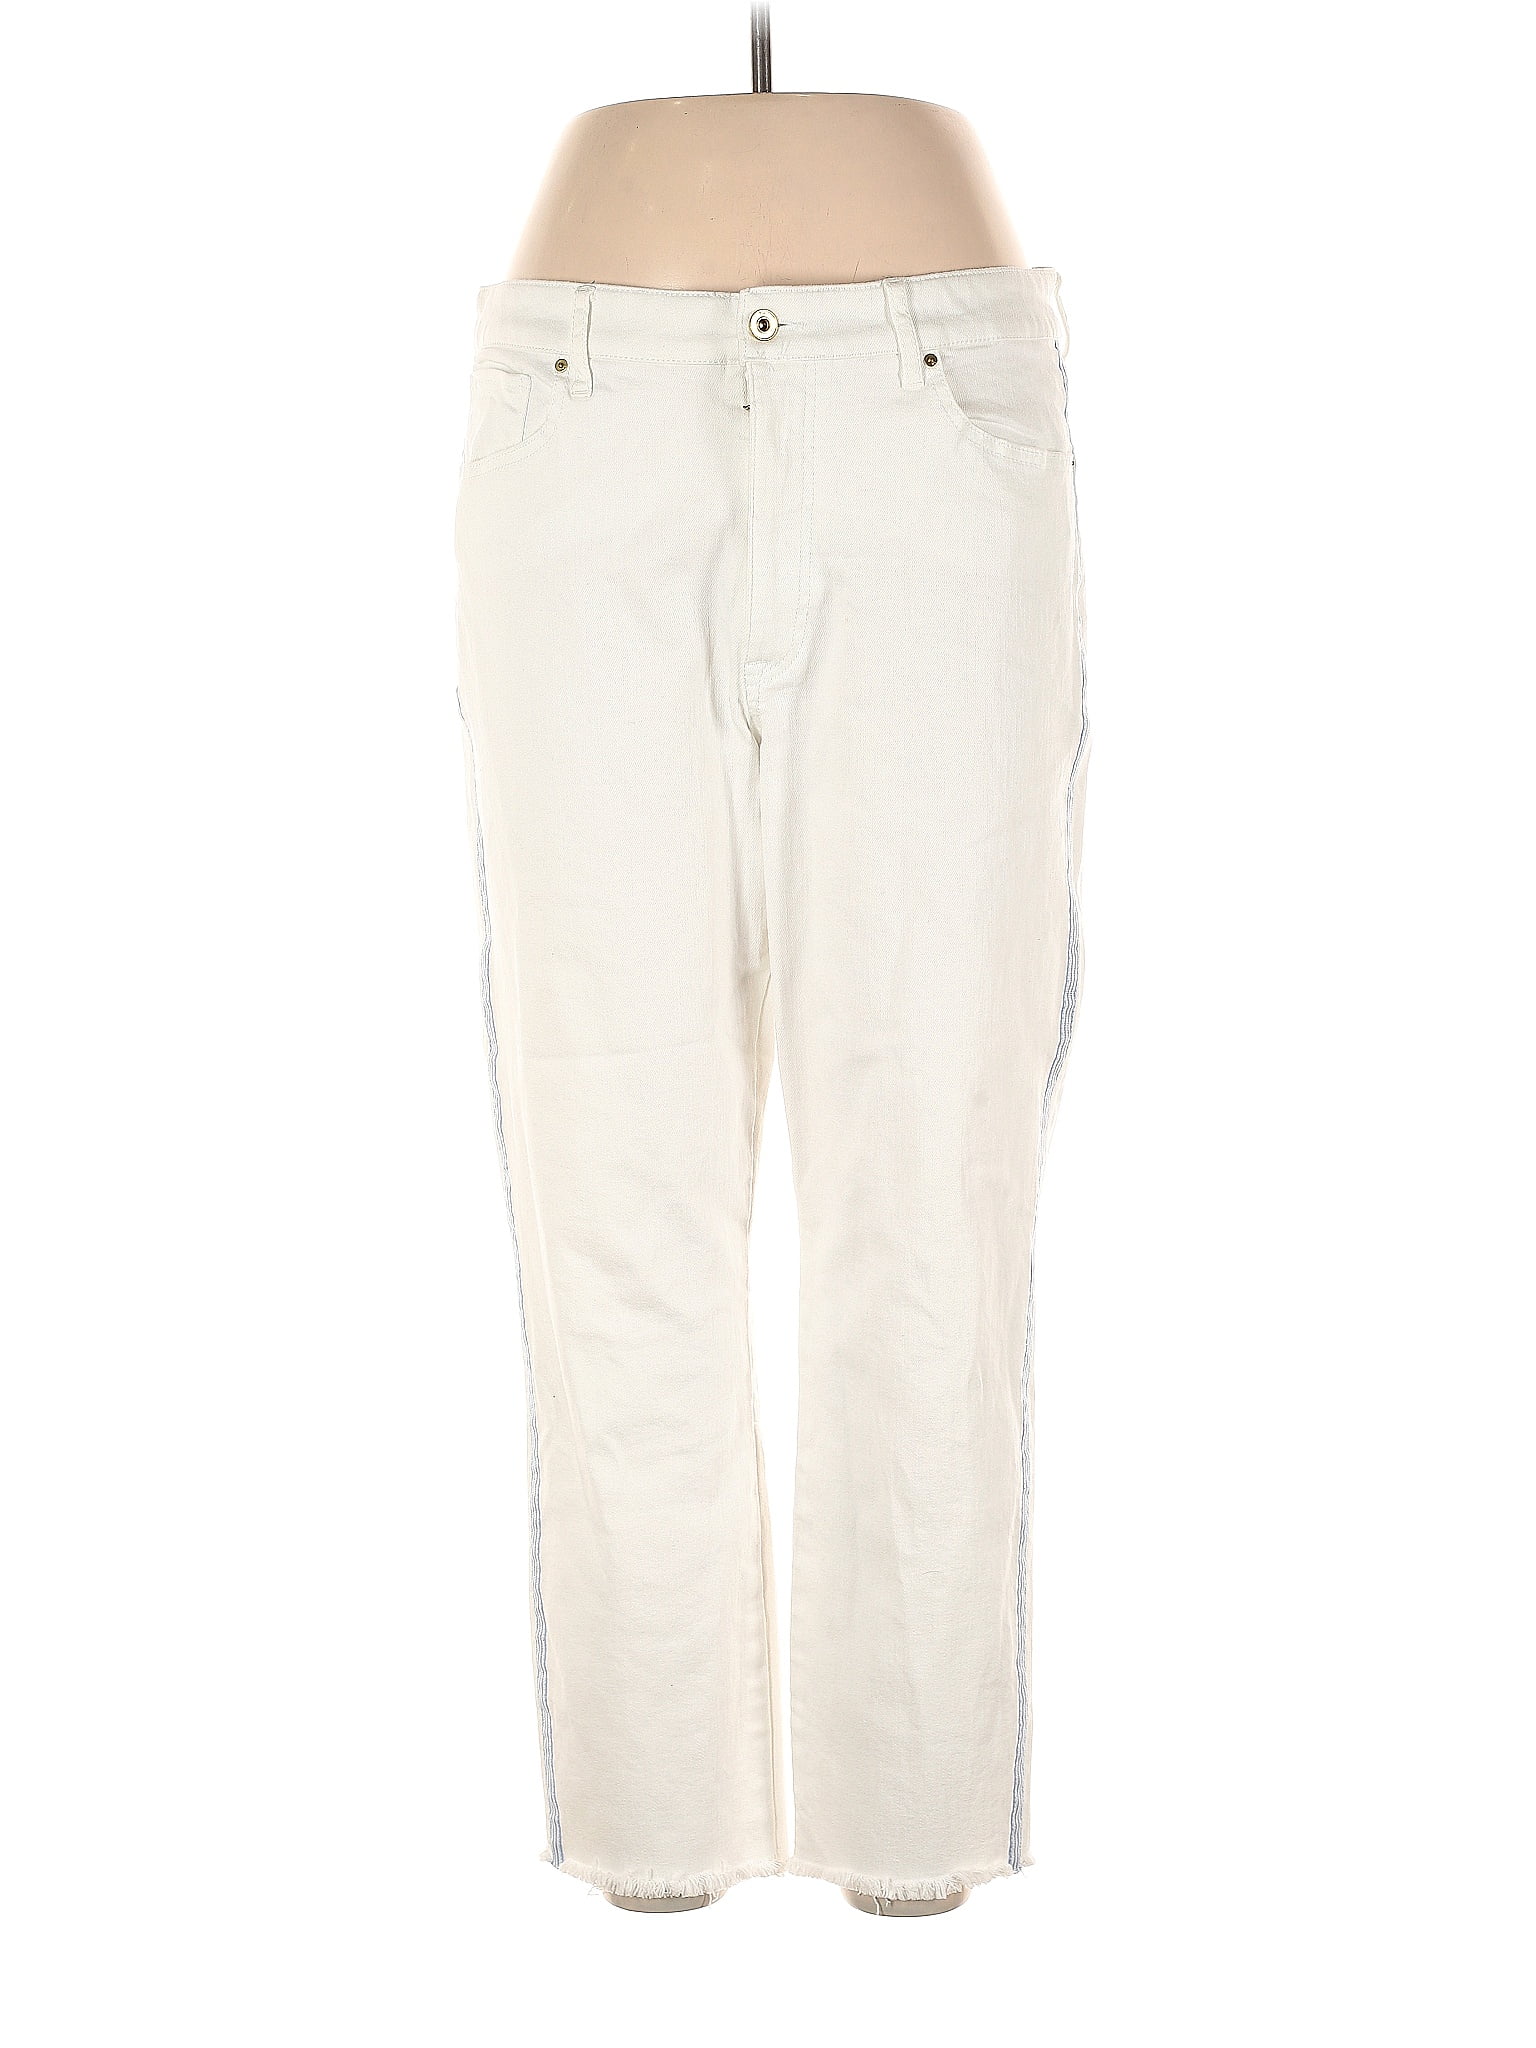 Tommy Hilfiger Solid Ivory Jeans Size 16 - 77% off | thredUP